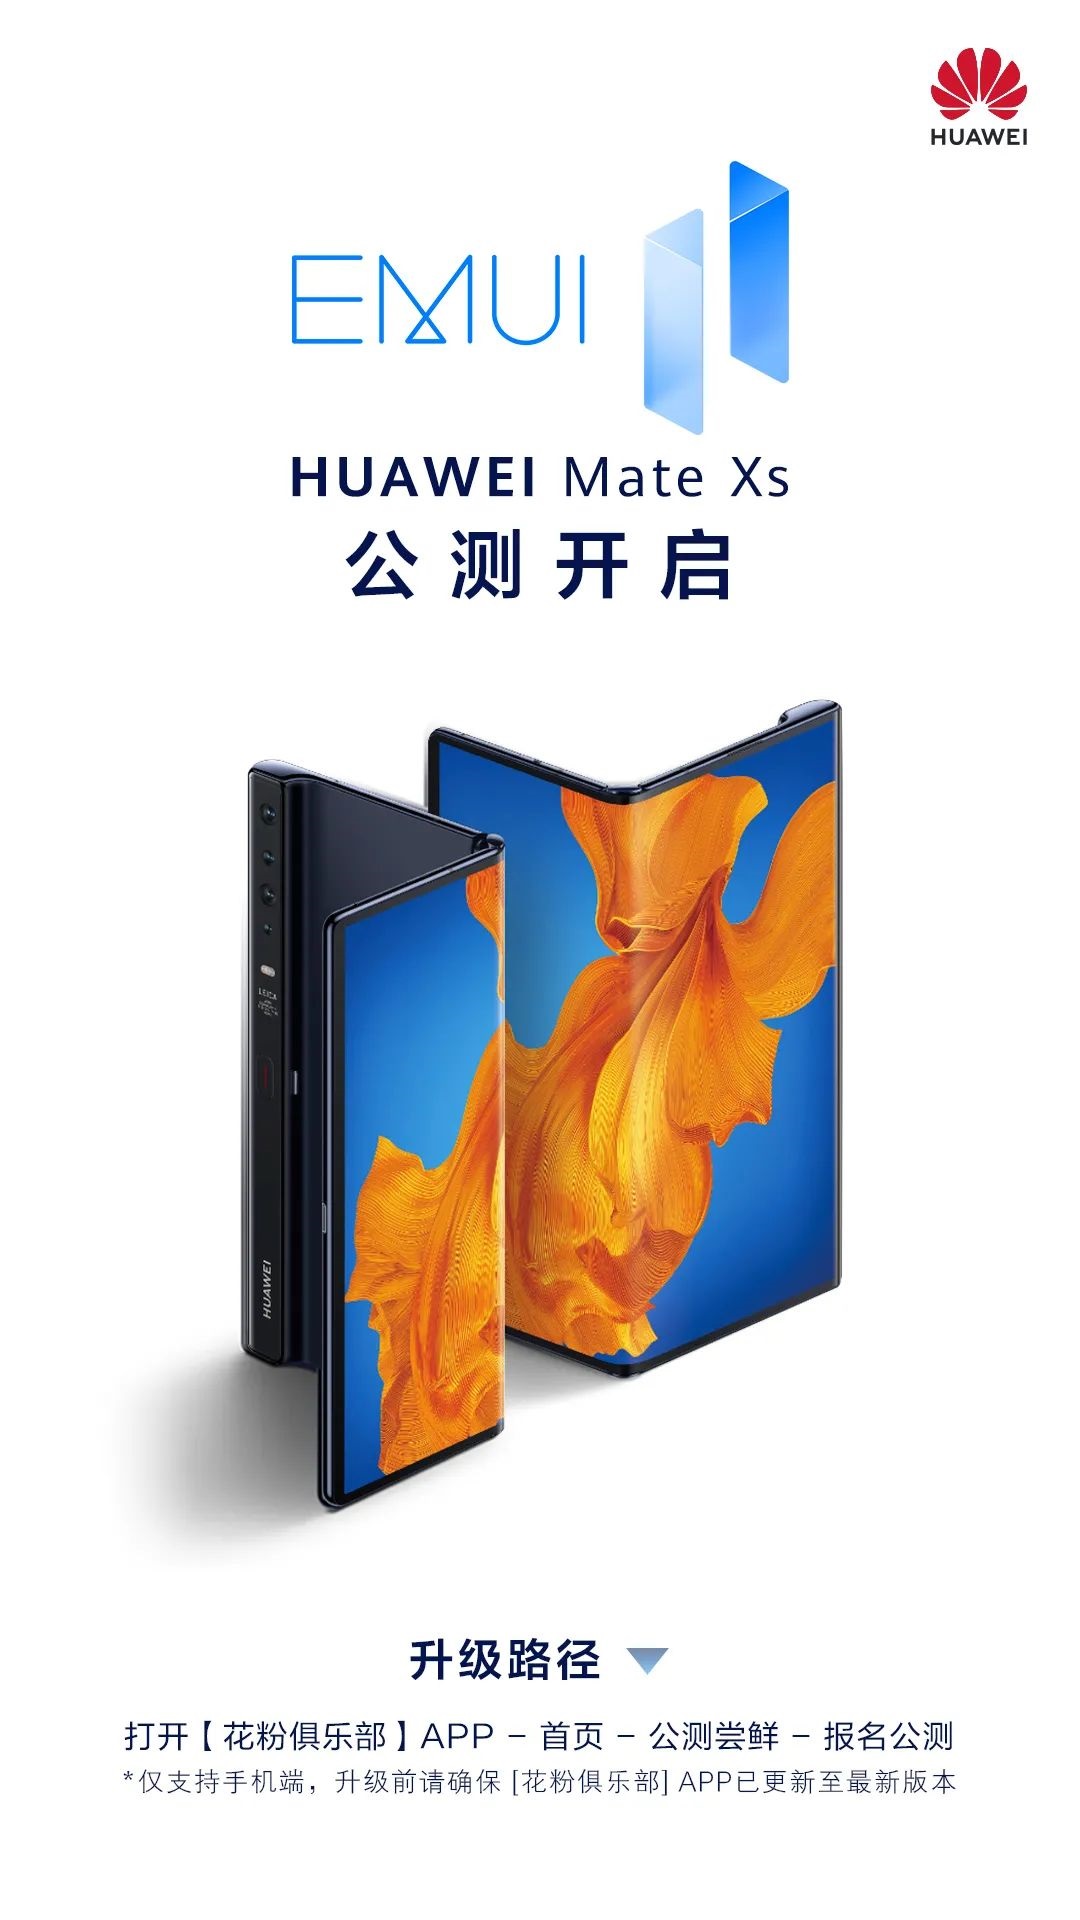 Huawei Mate Xs EMUI 11 Public Beta testing is now live